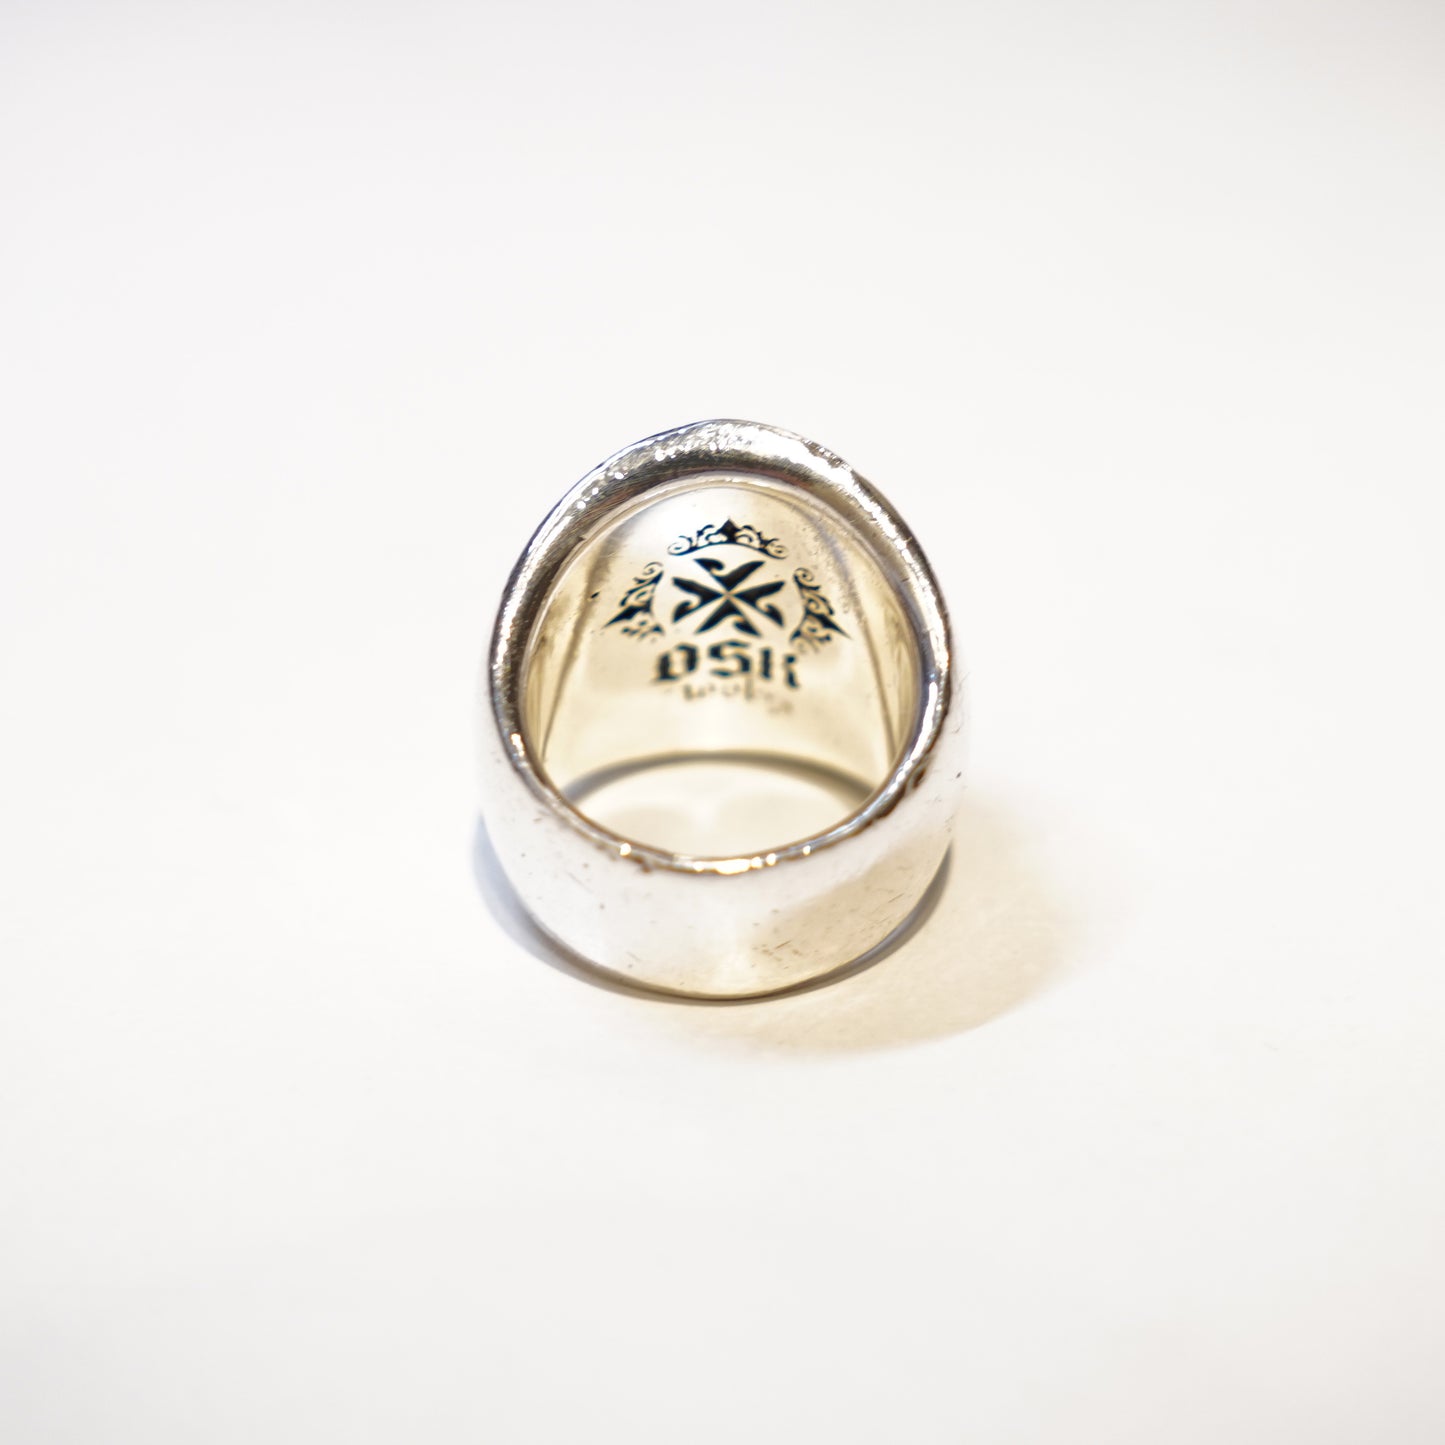 OSK Champion Ring